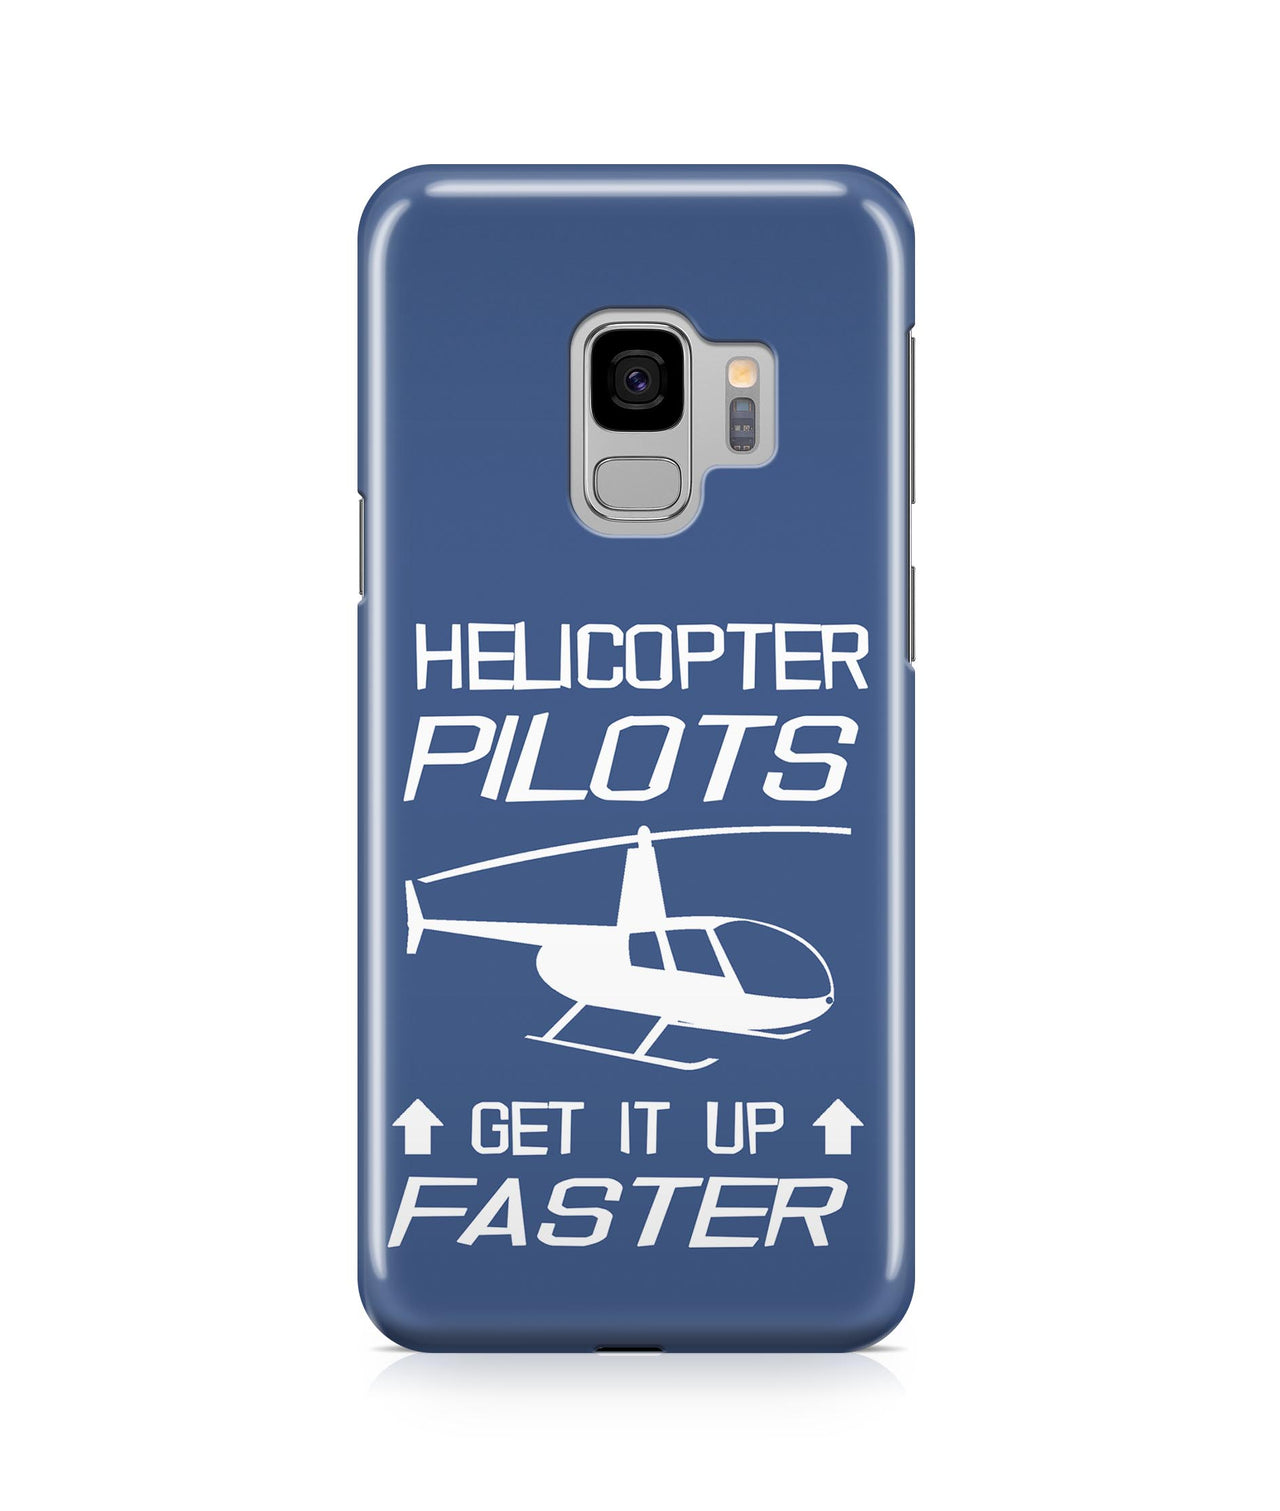 Helicopter Pilots Get It Up Faster Designed Samsung J Cases